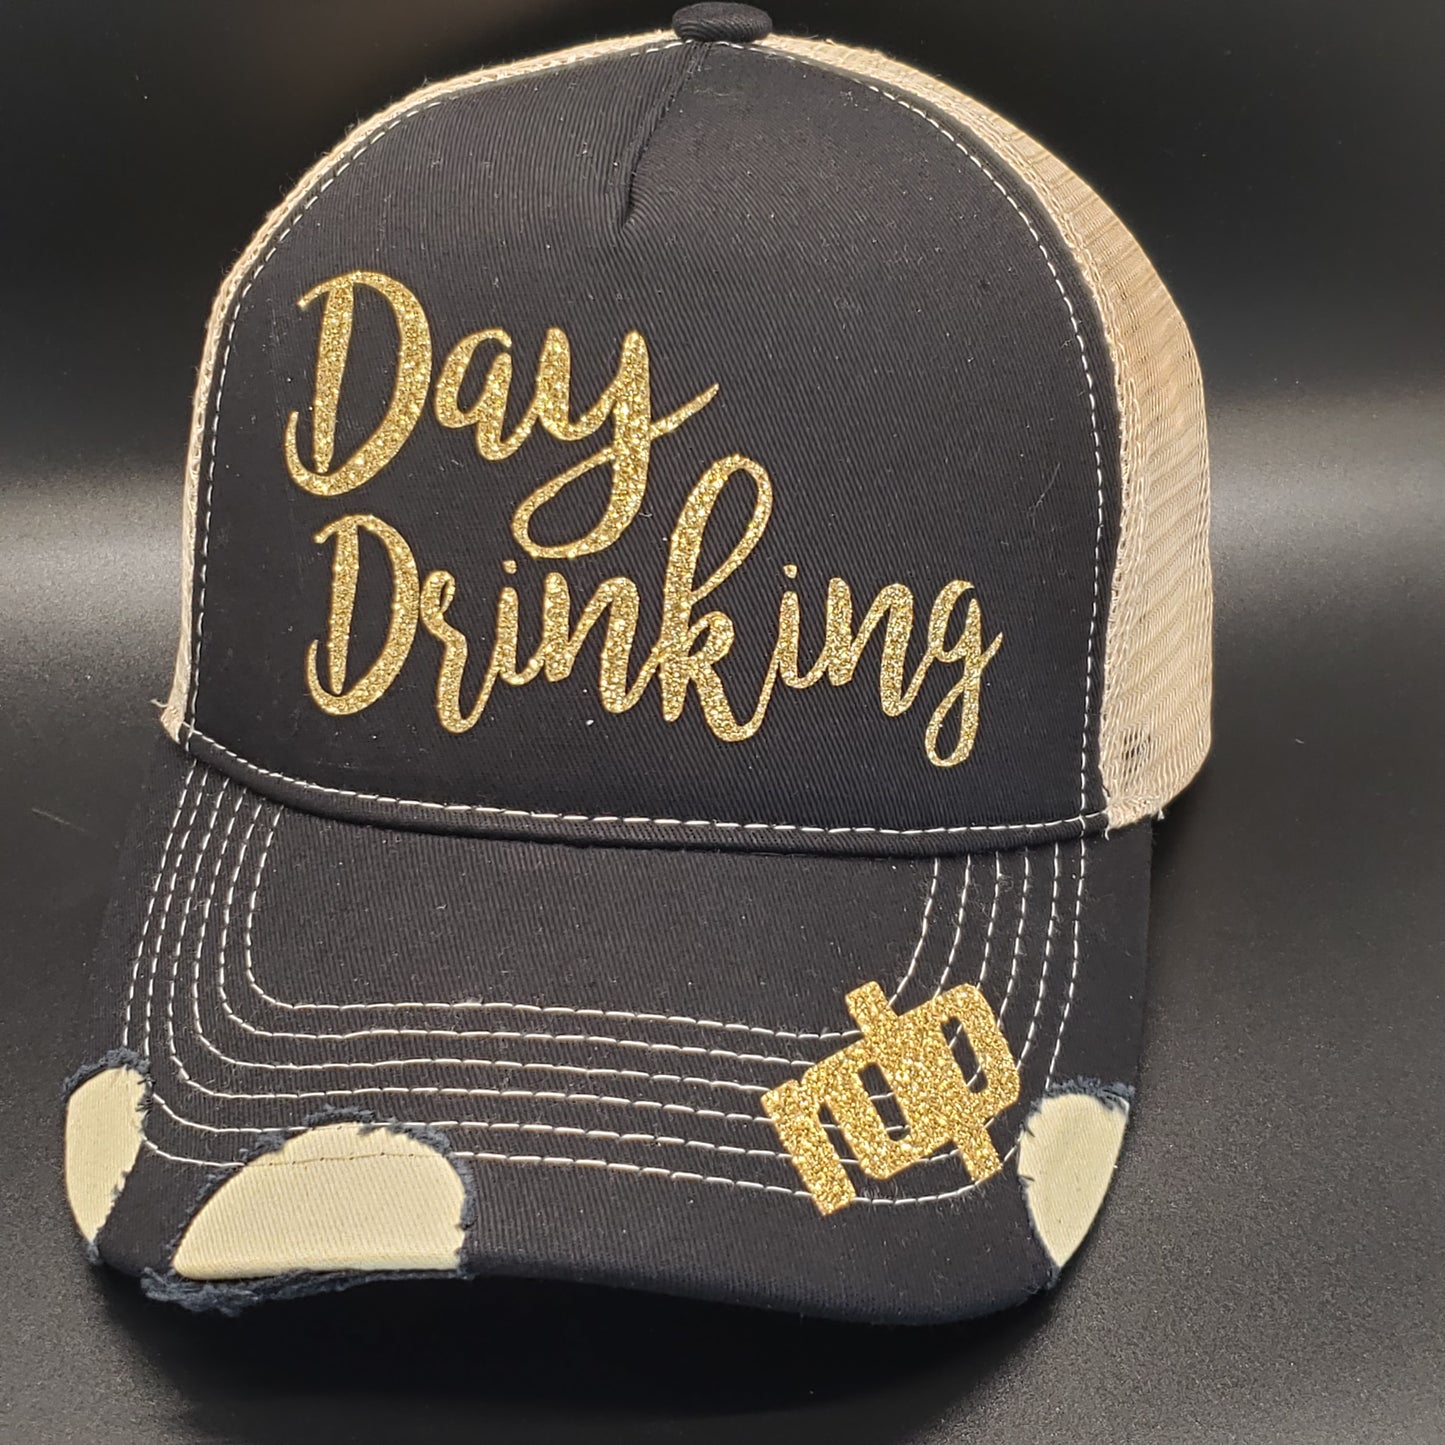 Women's 'Day Drinking'  Snapback Shimmer Hats